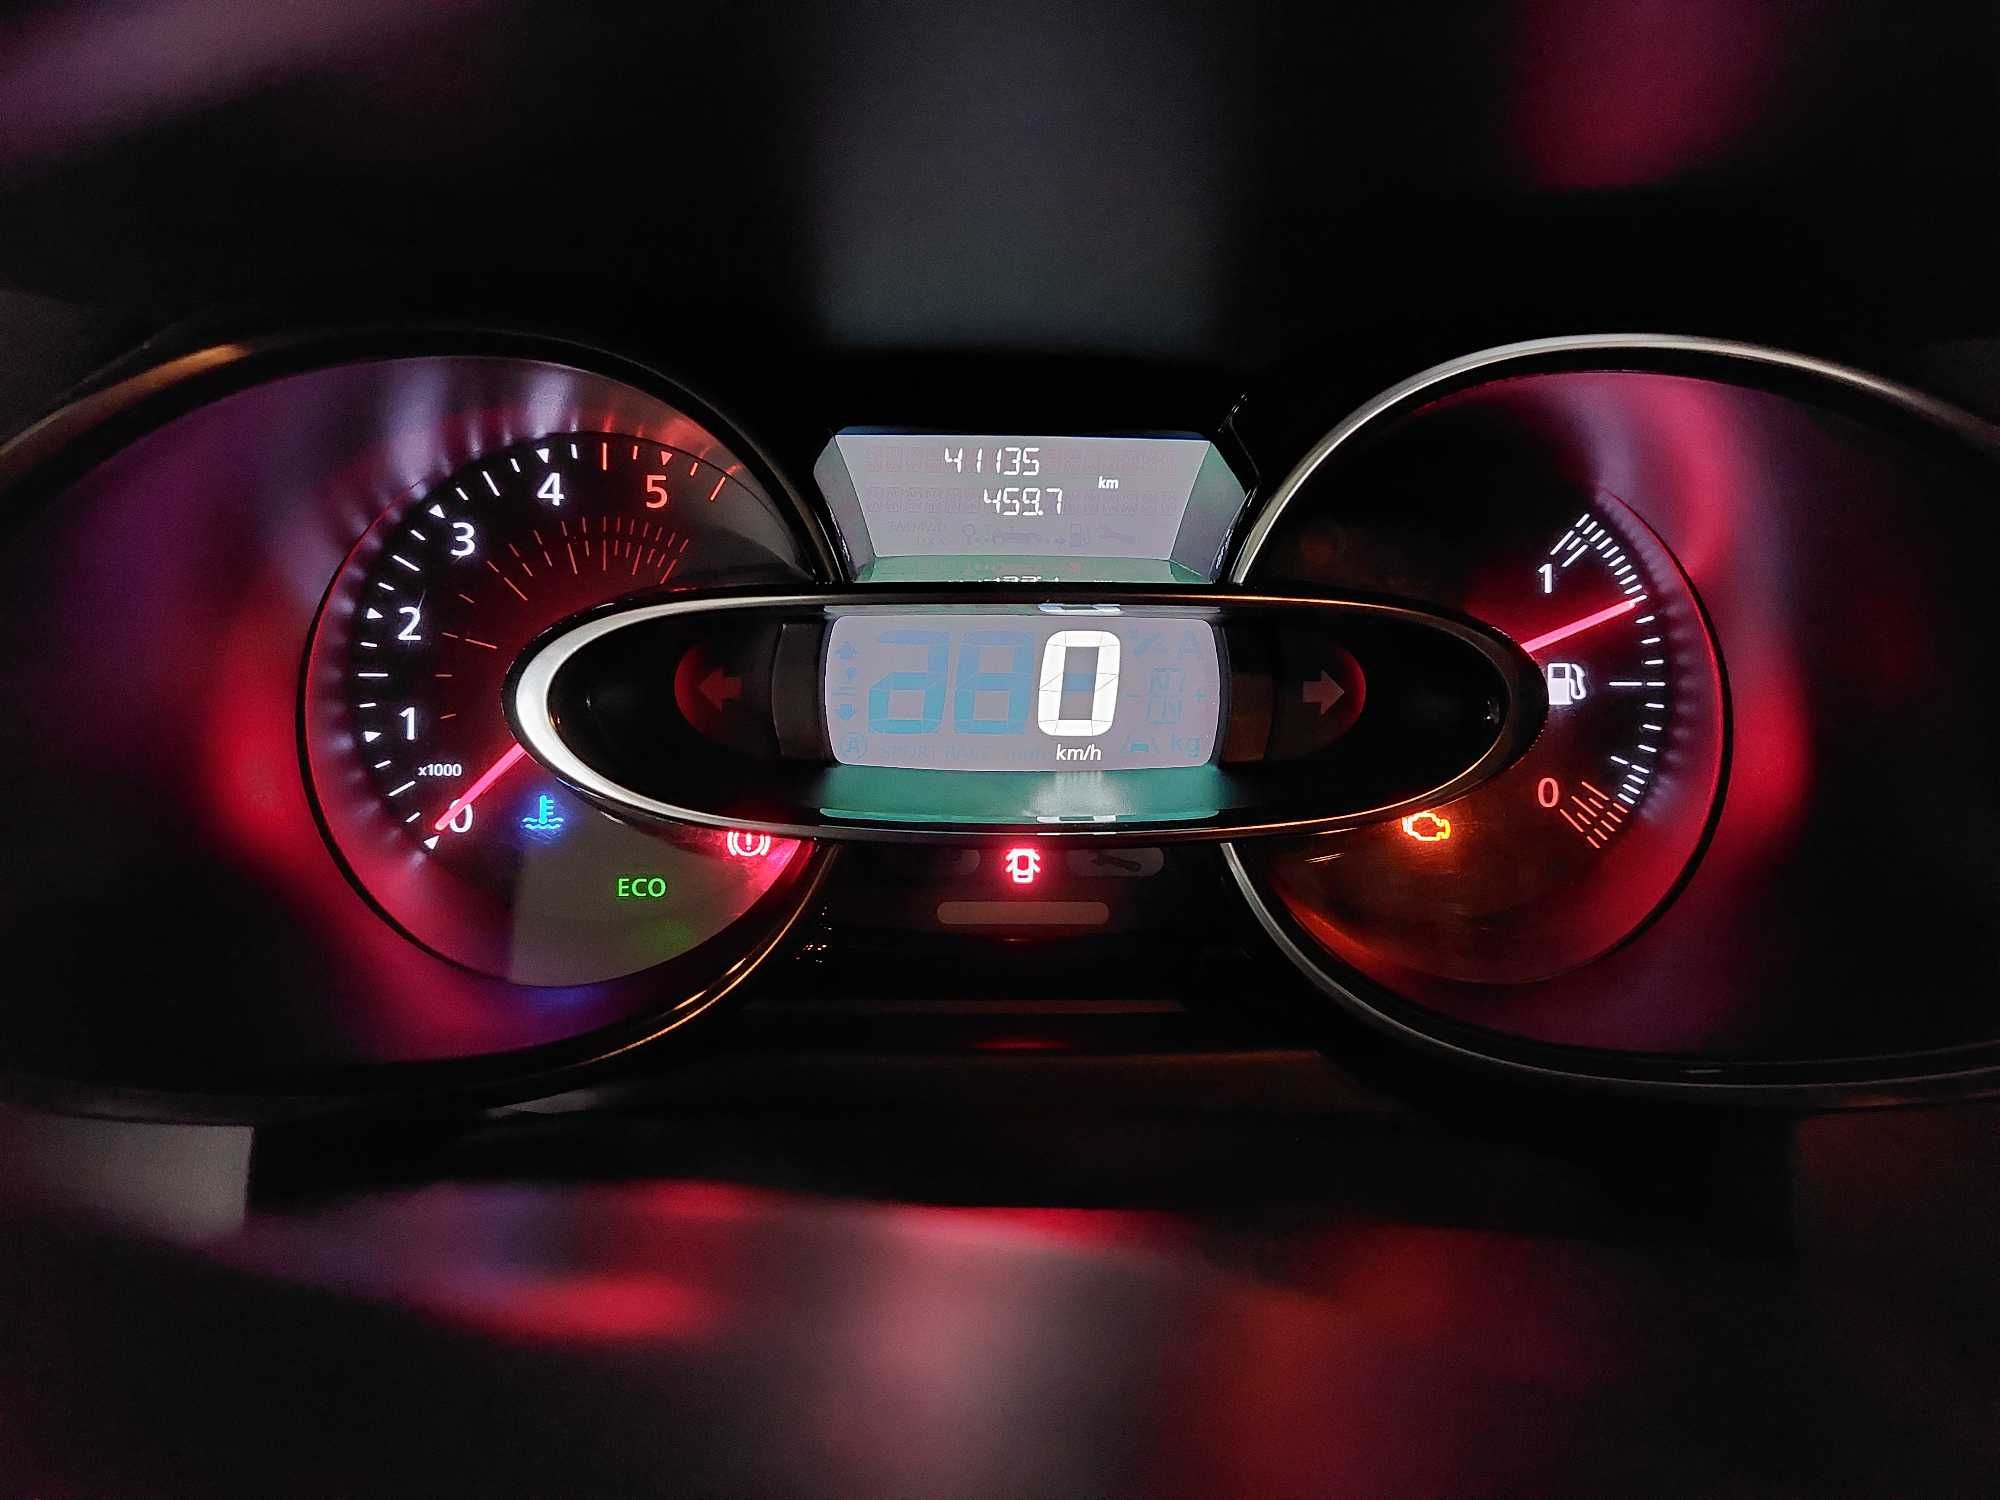 CLIO Renault 1,5 Dci 2019 so 41600 kms - RARO - Impecavel